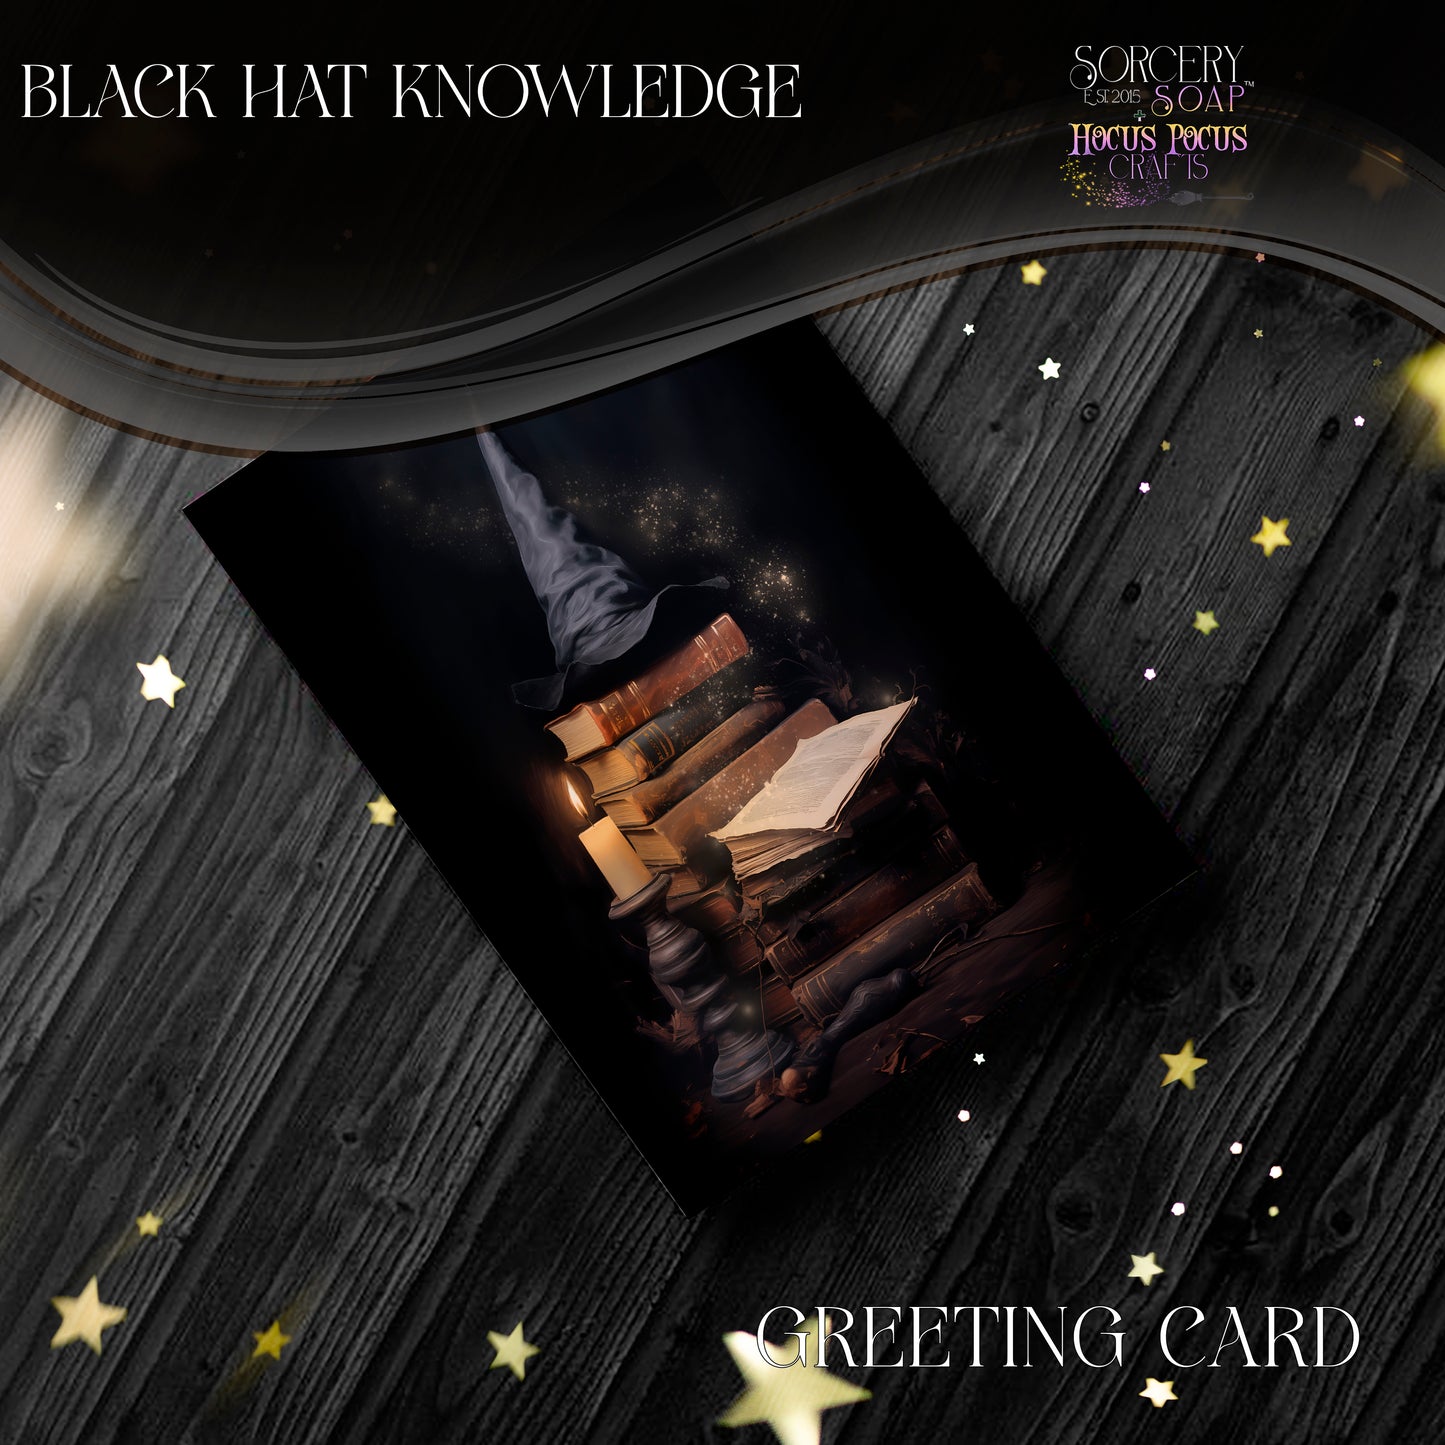 Black Hat Knowledge Greeting Card